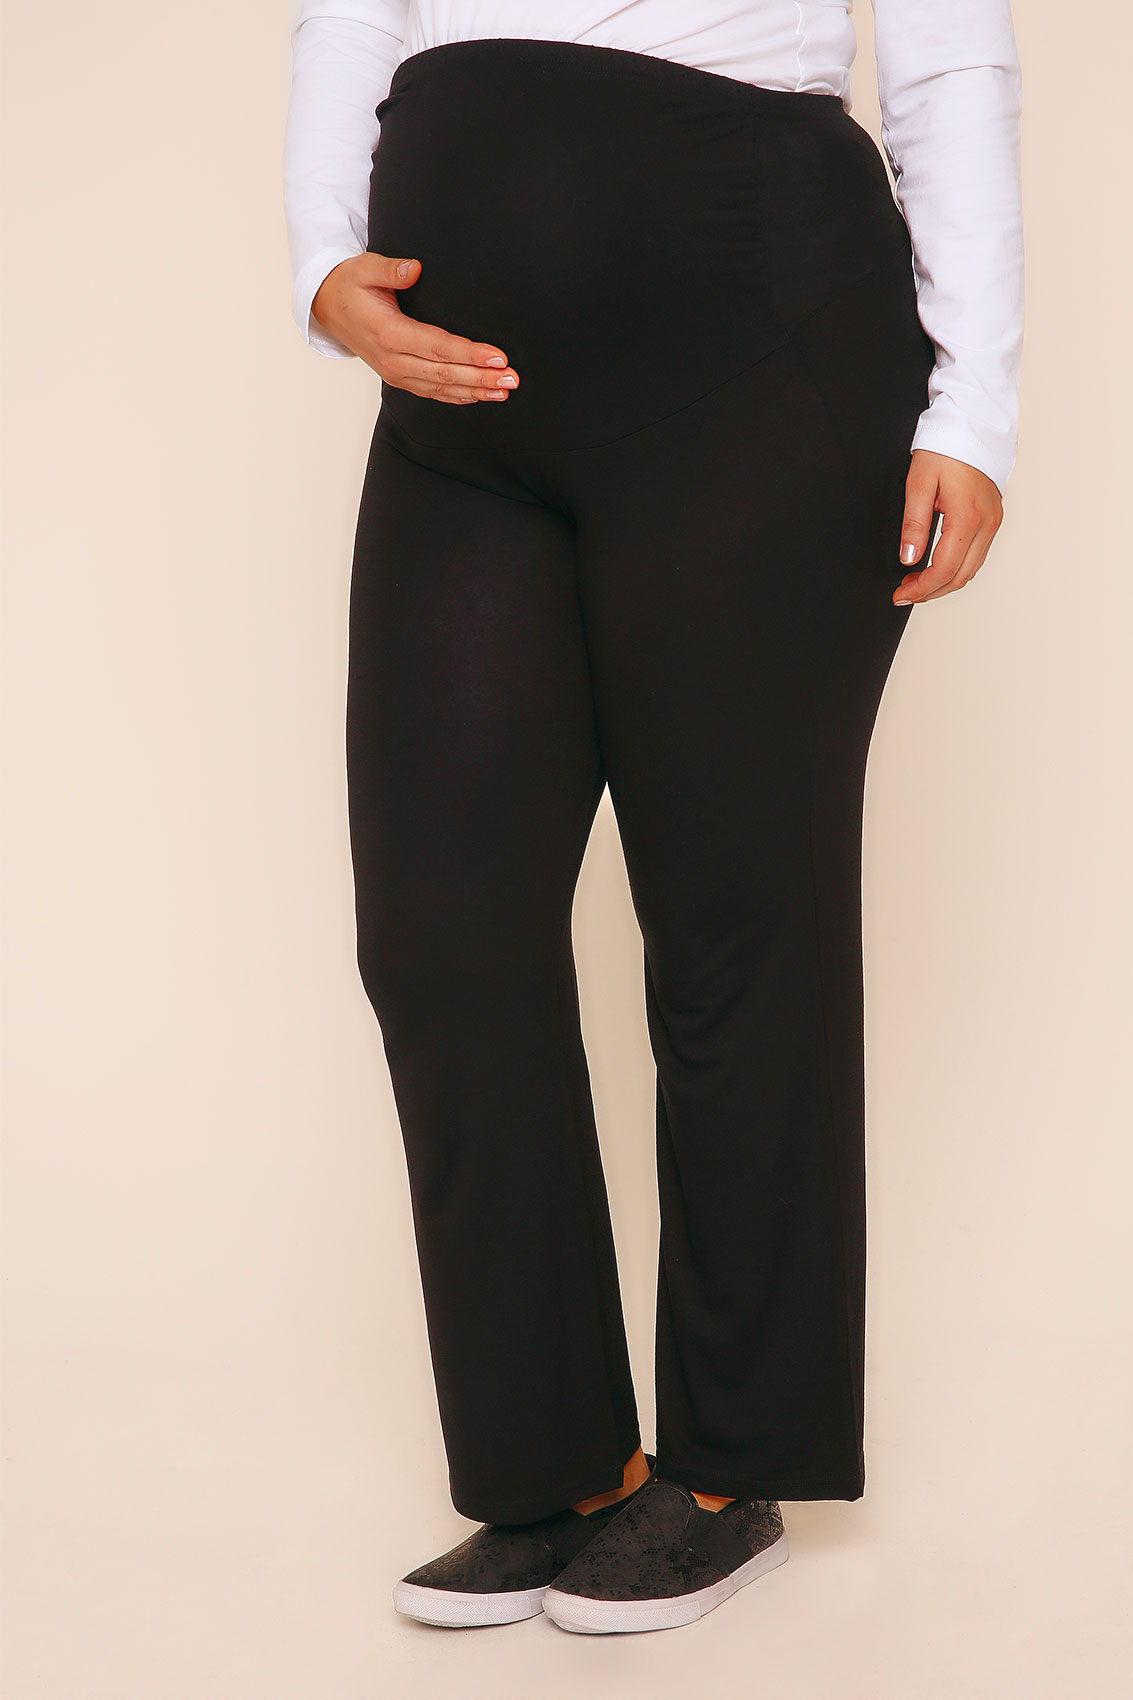 BUMP IT UP MATERNITY Black Yoga Pants With Control Panel, Plus size 16,18,20,22,24,26,